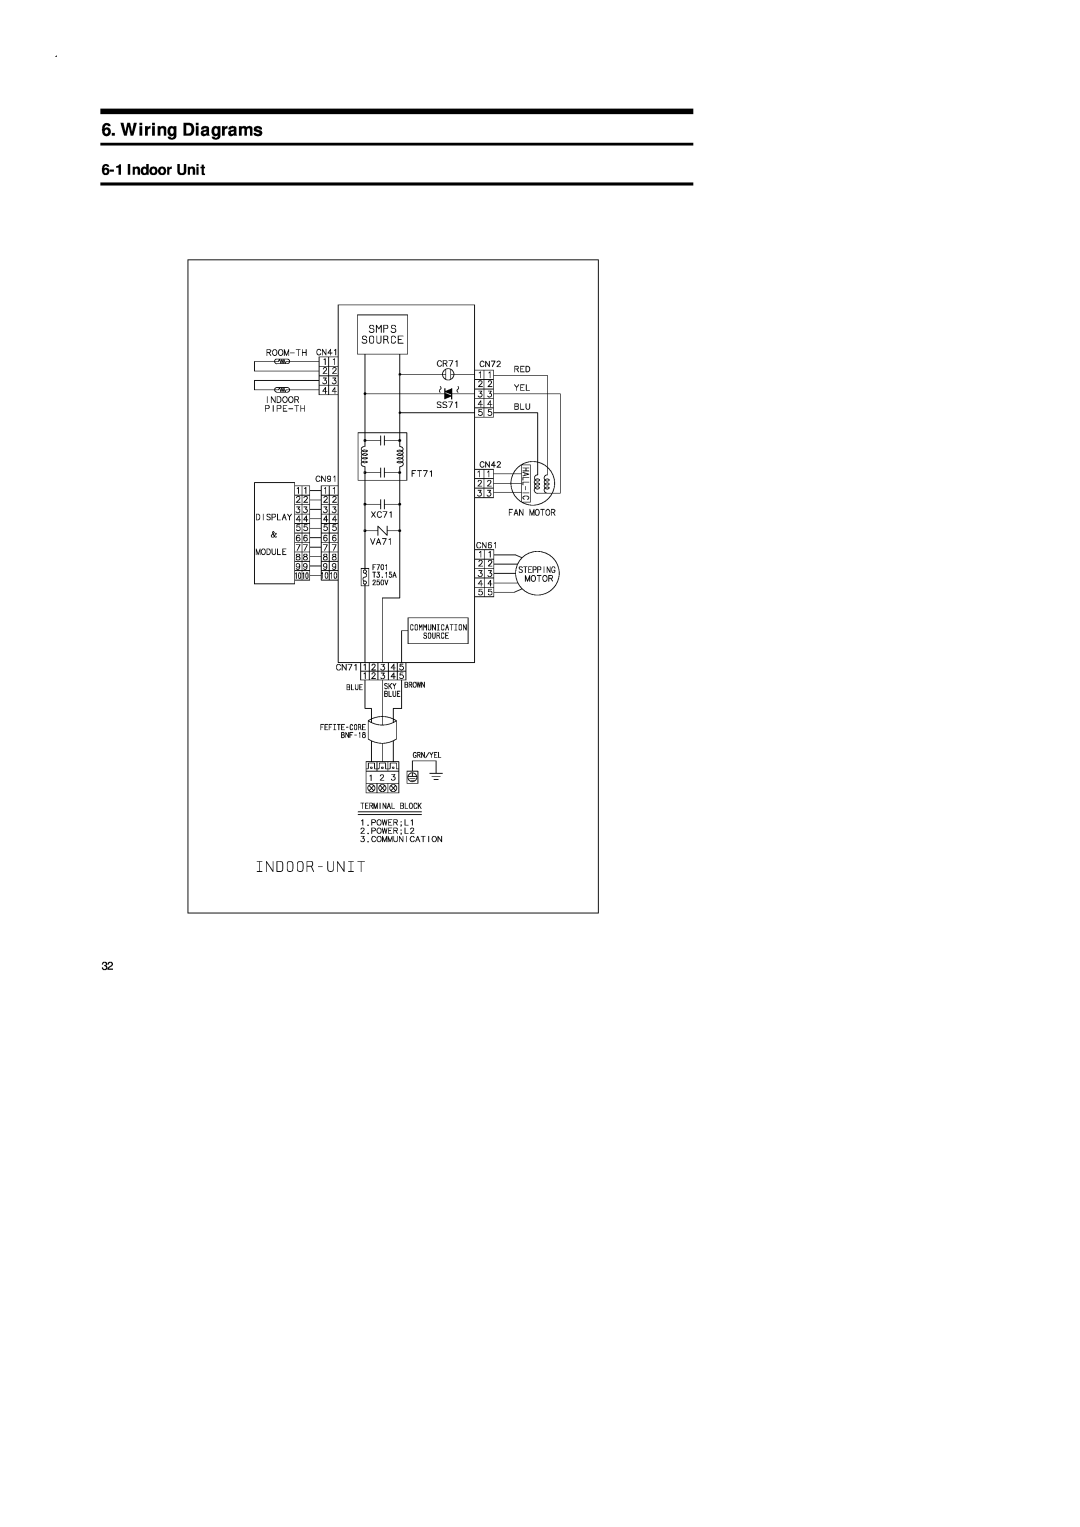 Samsung UD18B1C2, UD26B1C2, AD18B1C09, AD26B1C13 service manual Wiring Diagrams, 6-1Indoor Unit 